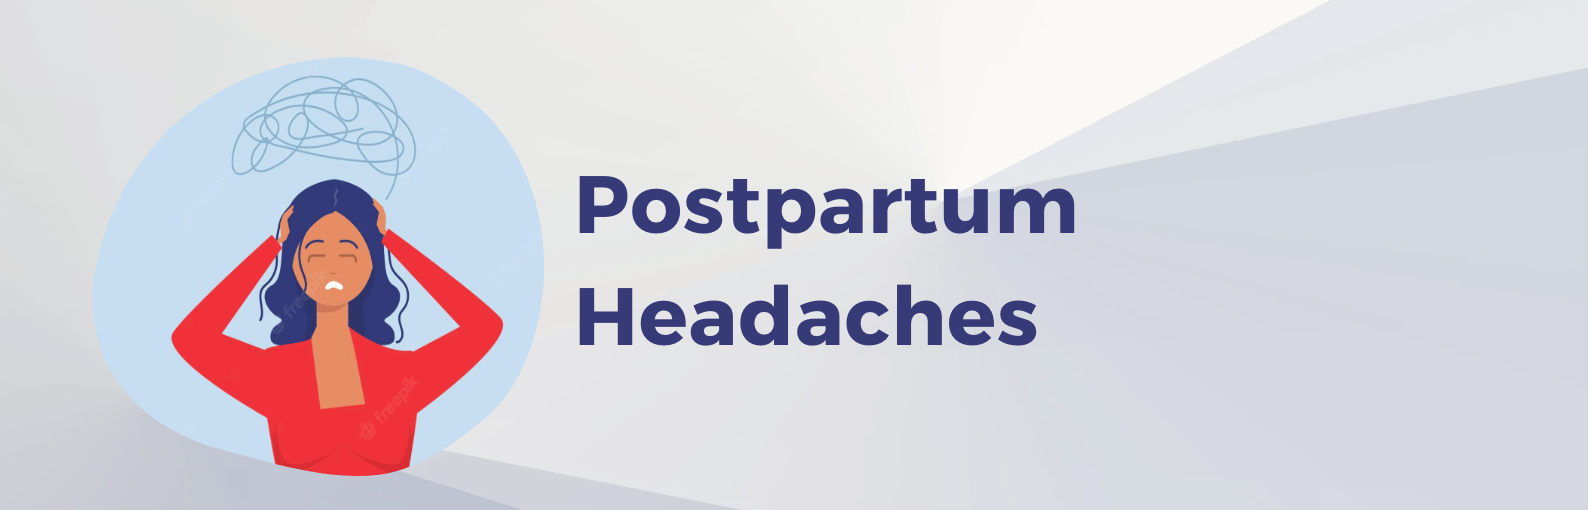 postpartum headaches